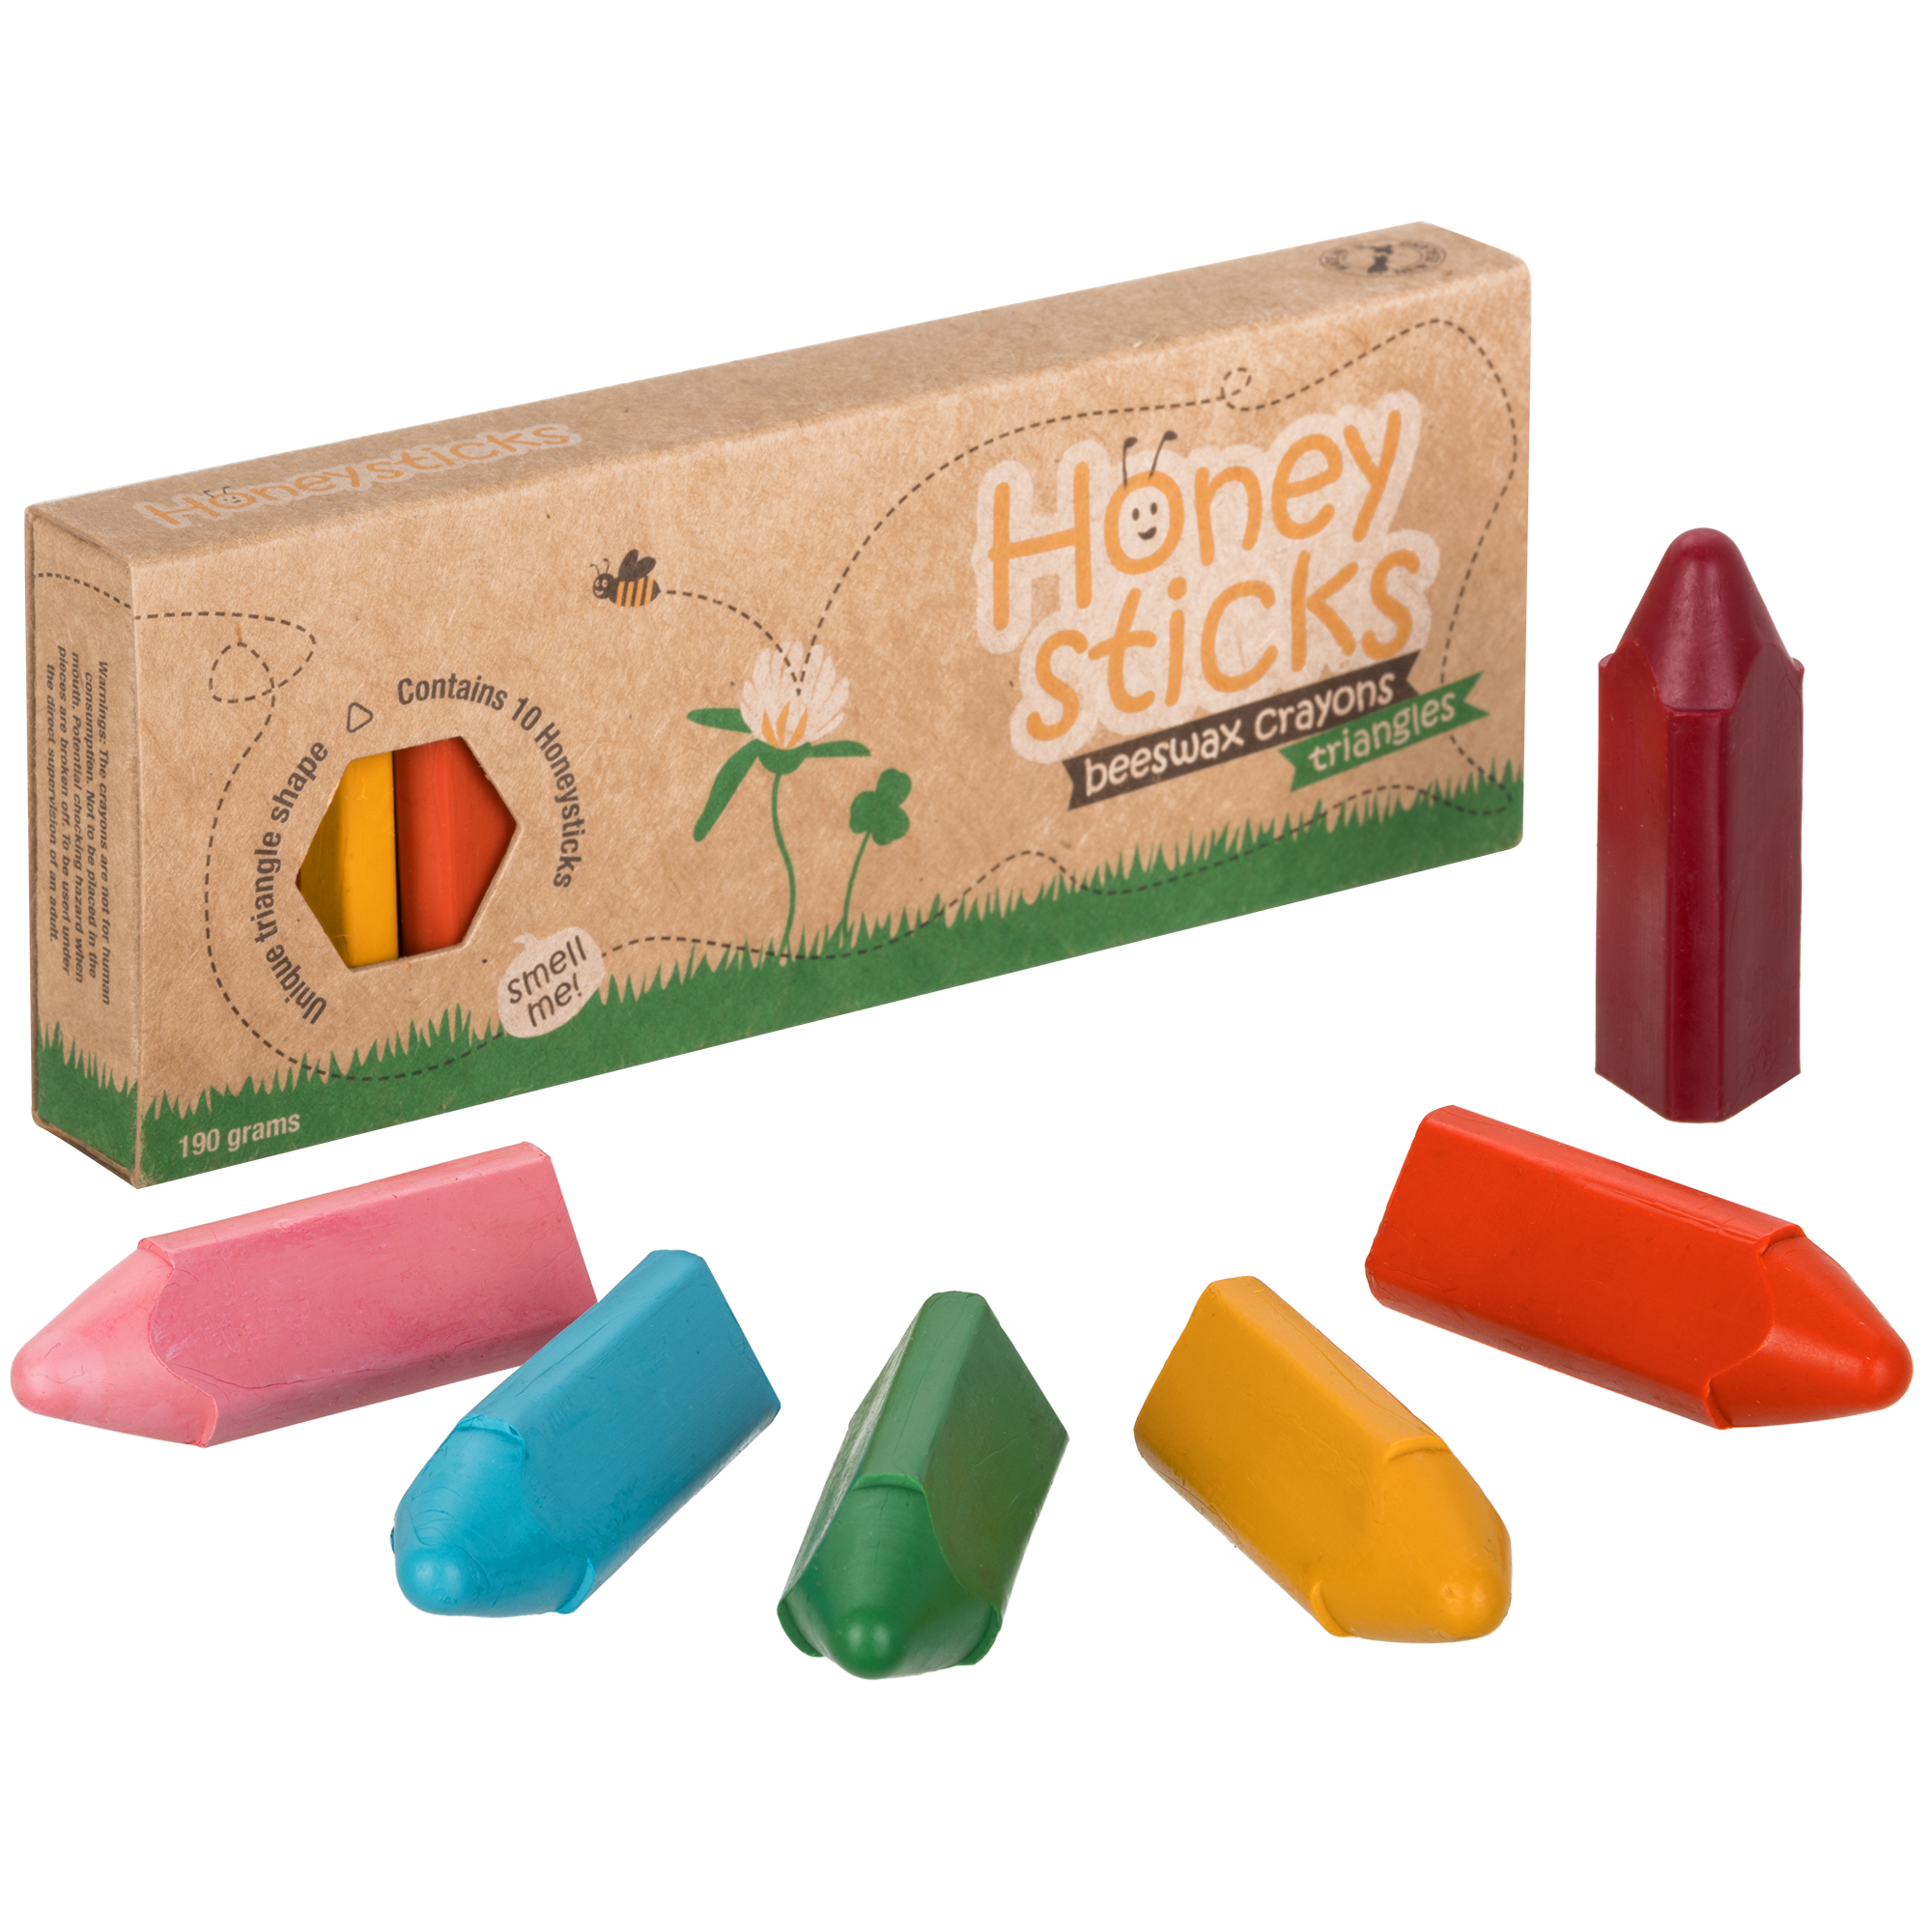 Honey Sticks Beeswax Crayons - Originals (pack of 12)